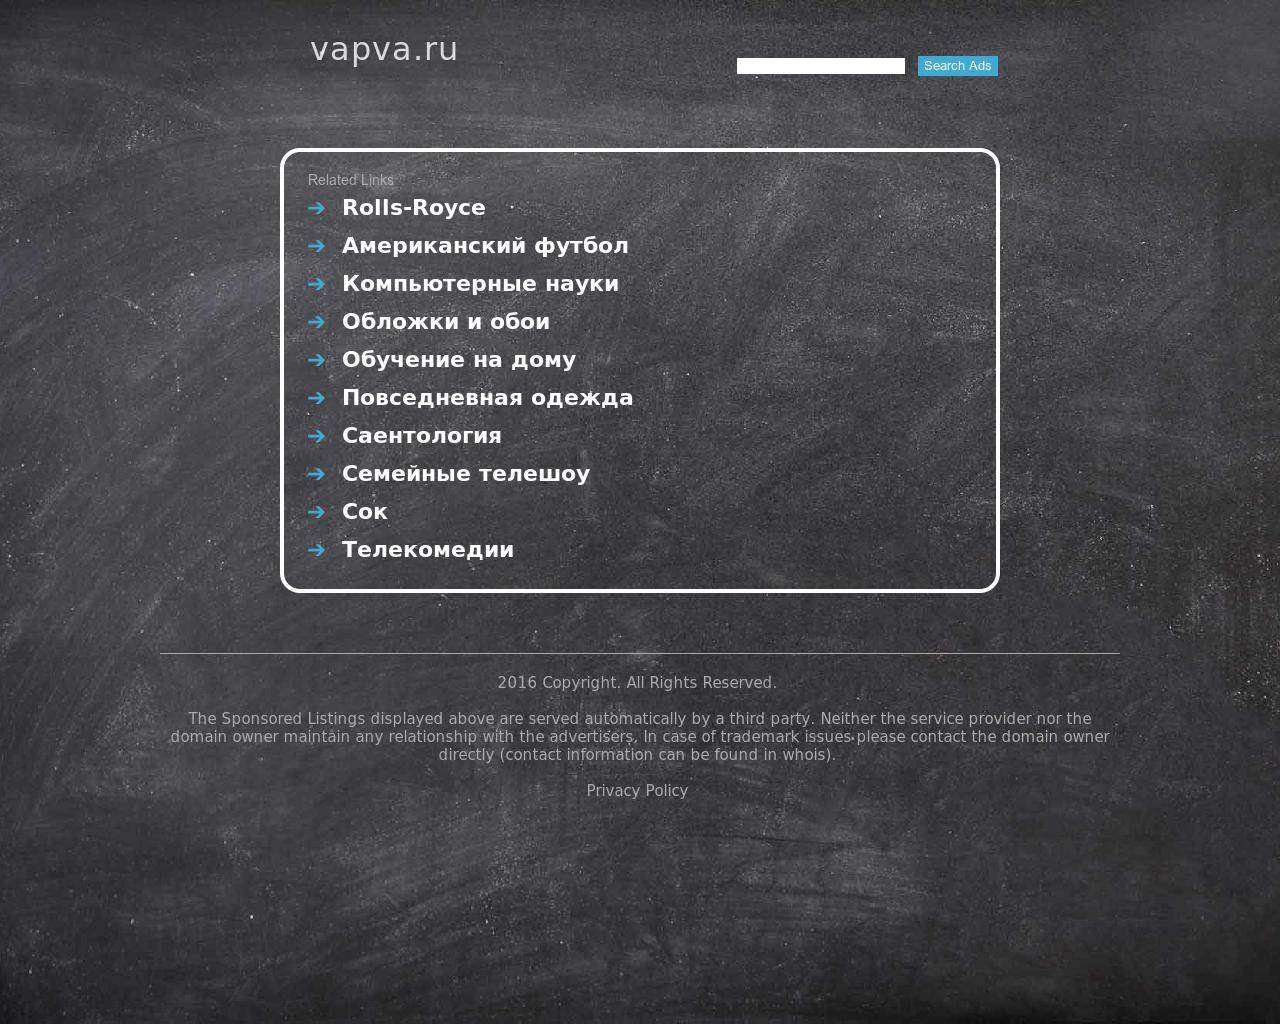 Изображение сайта vapva.ru в разрешении 1280x1024